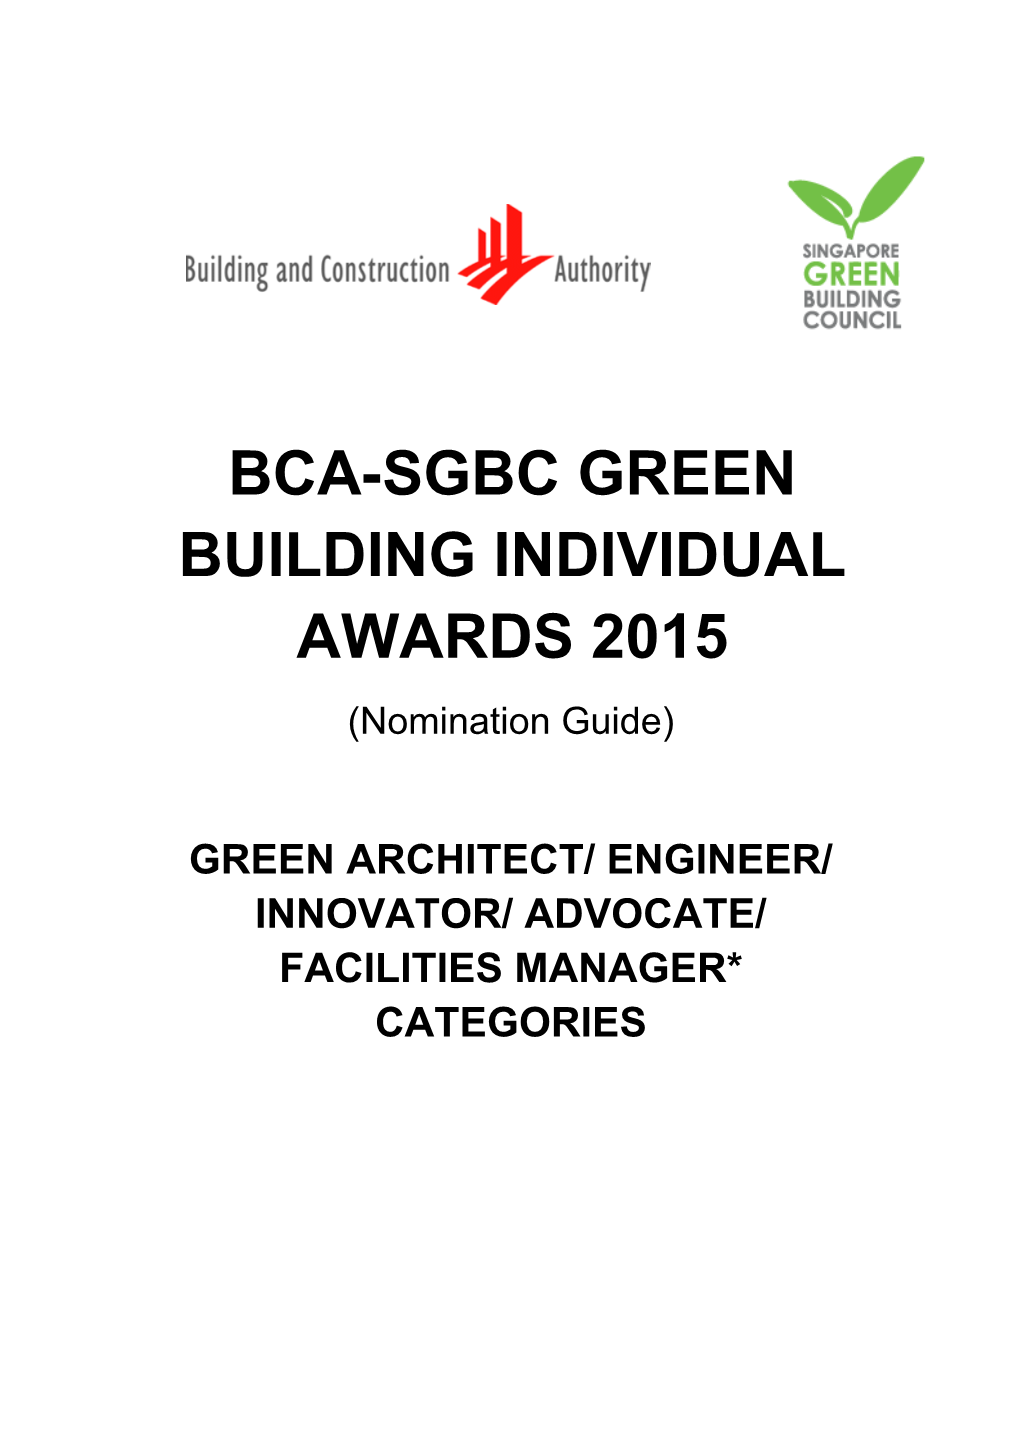 BCA-SGBC Green Building Individual Awards 2015